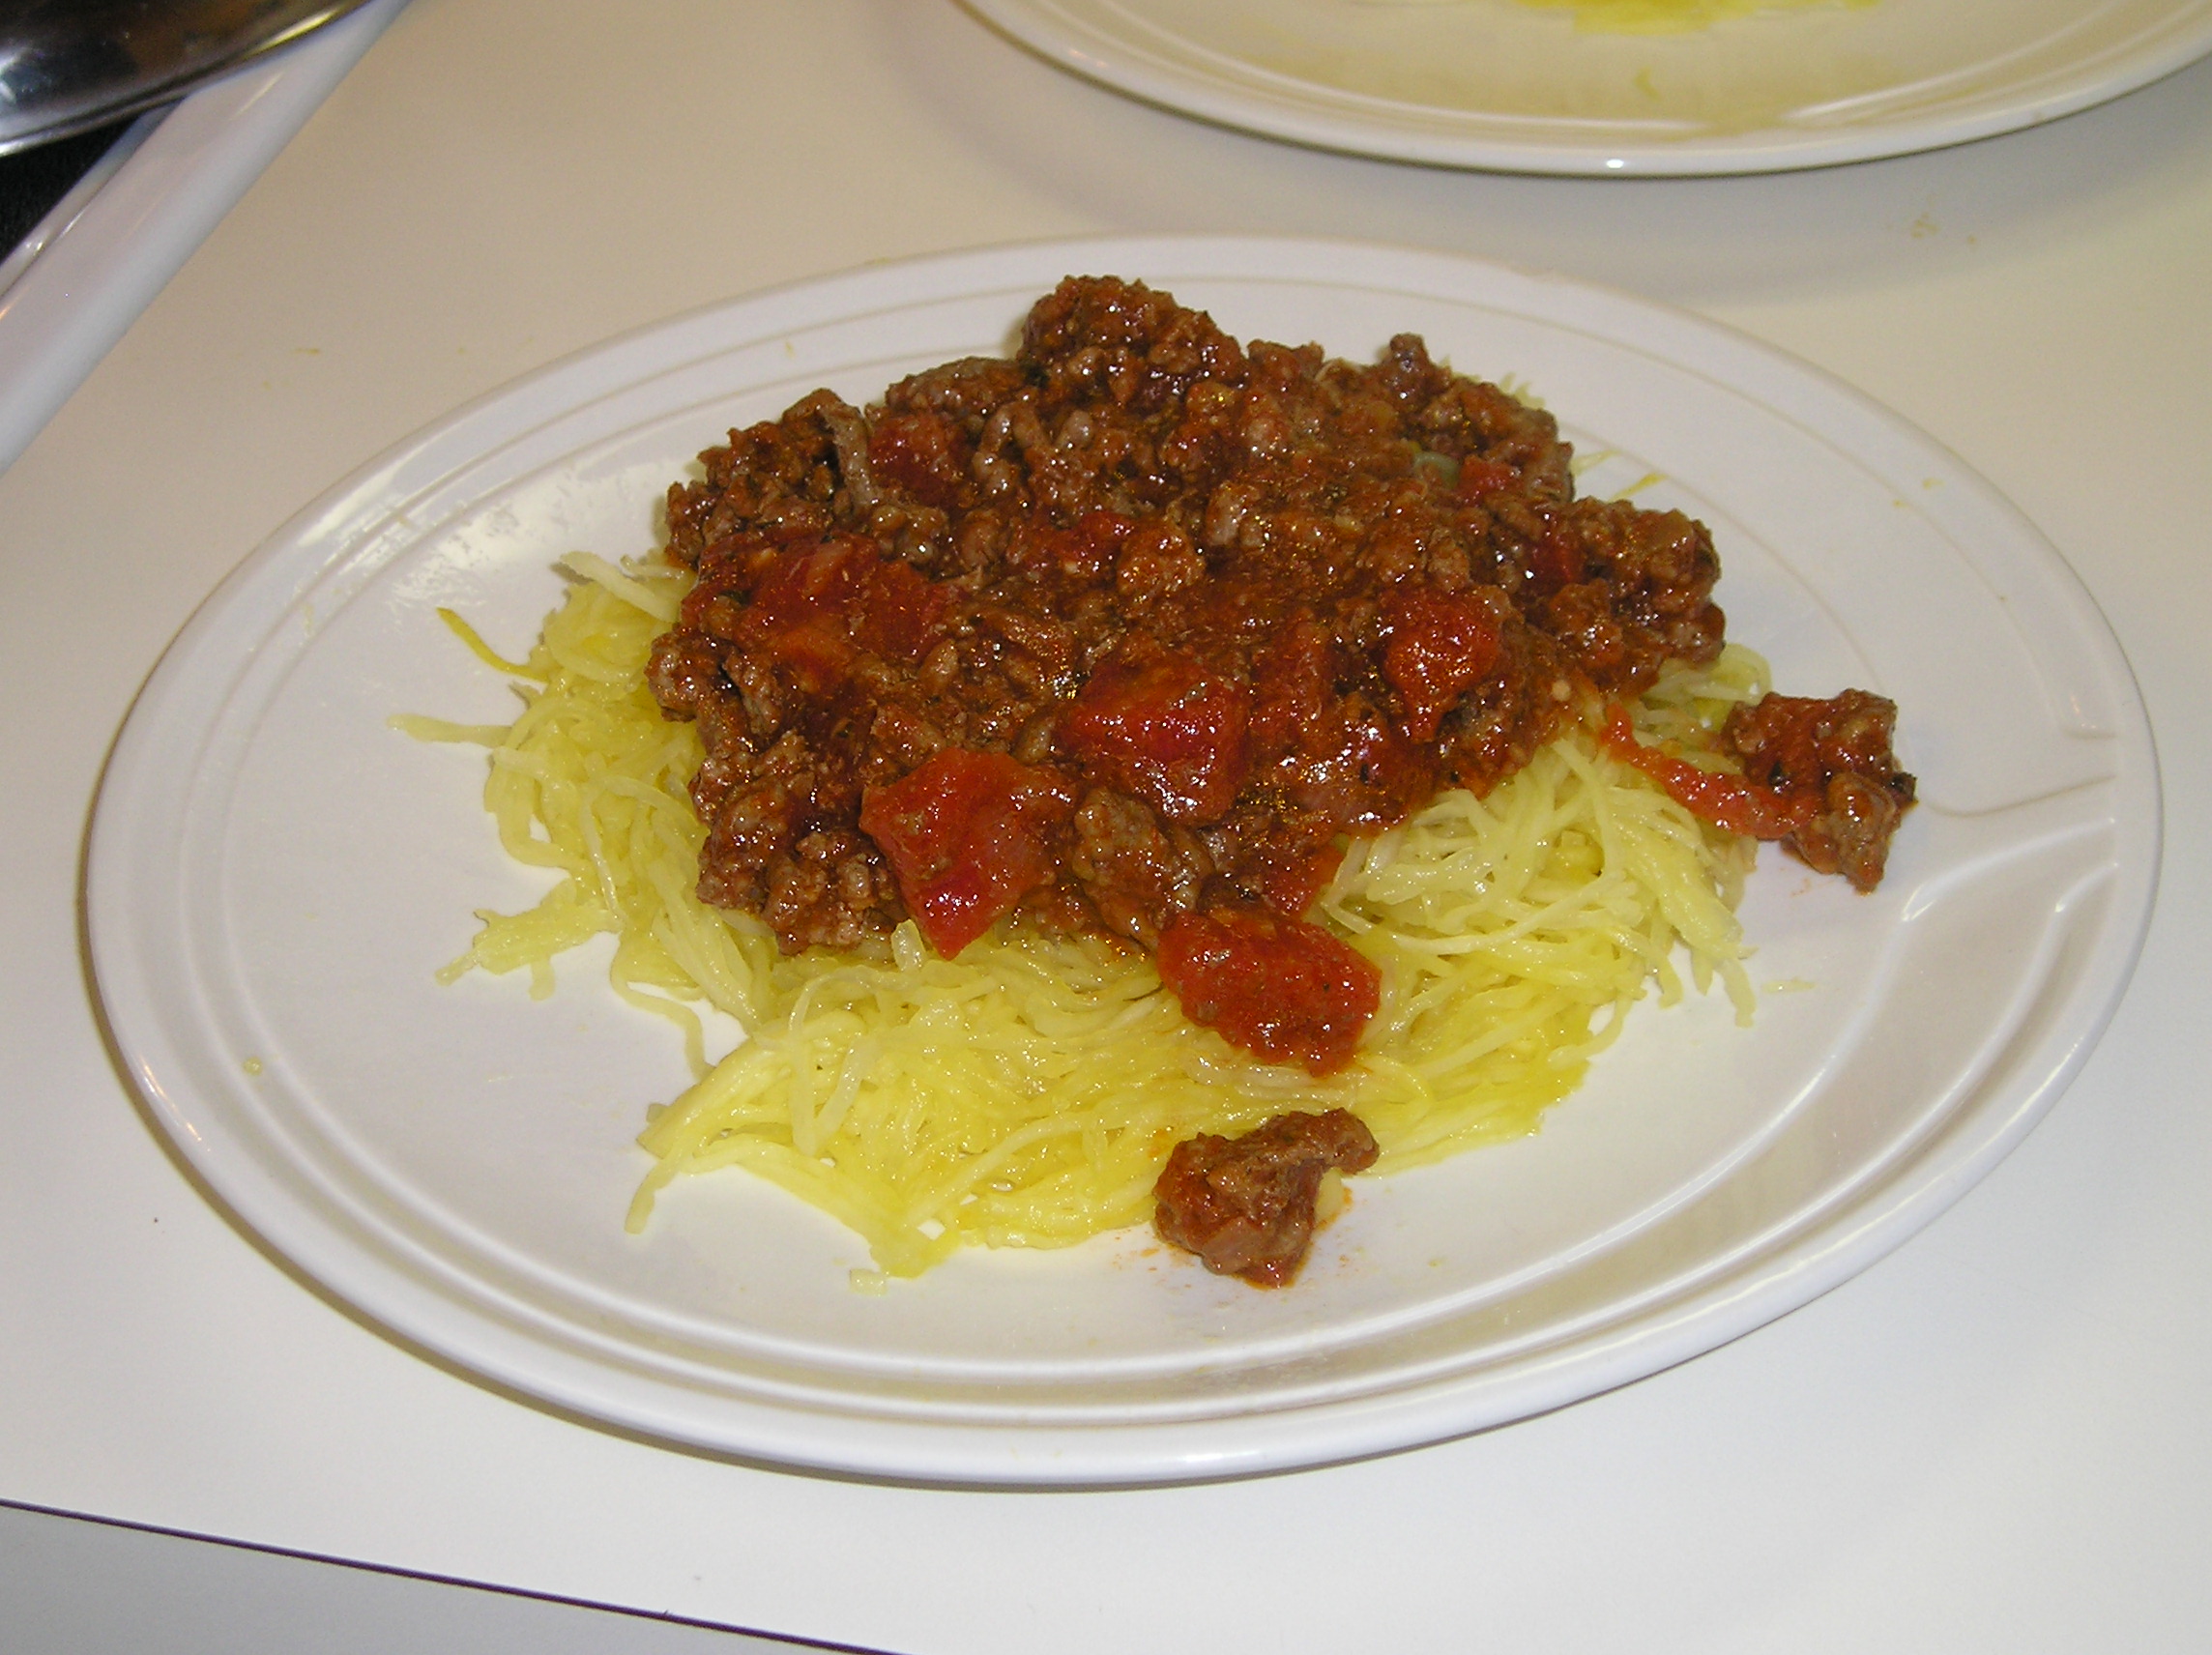 Extra meaty spaghetti sauce with spaghetti squash